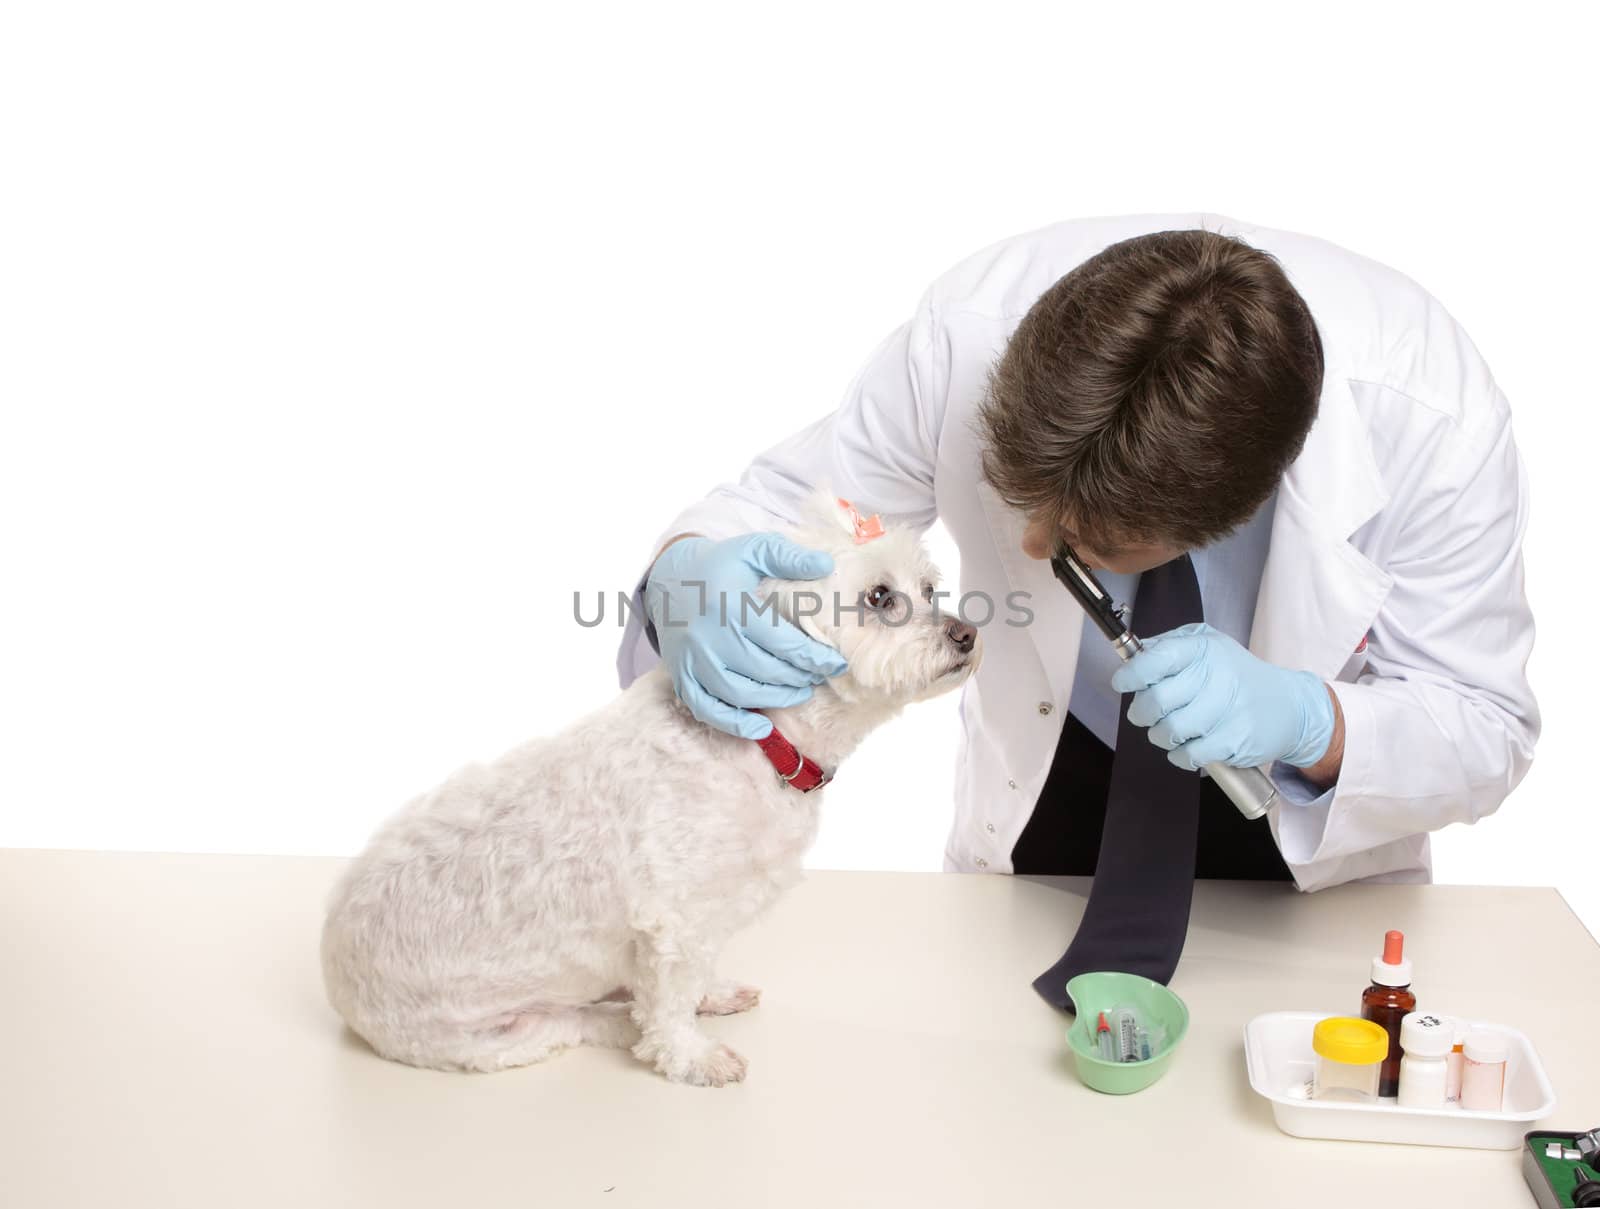 Veterinary checkup by lovleah